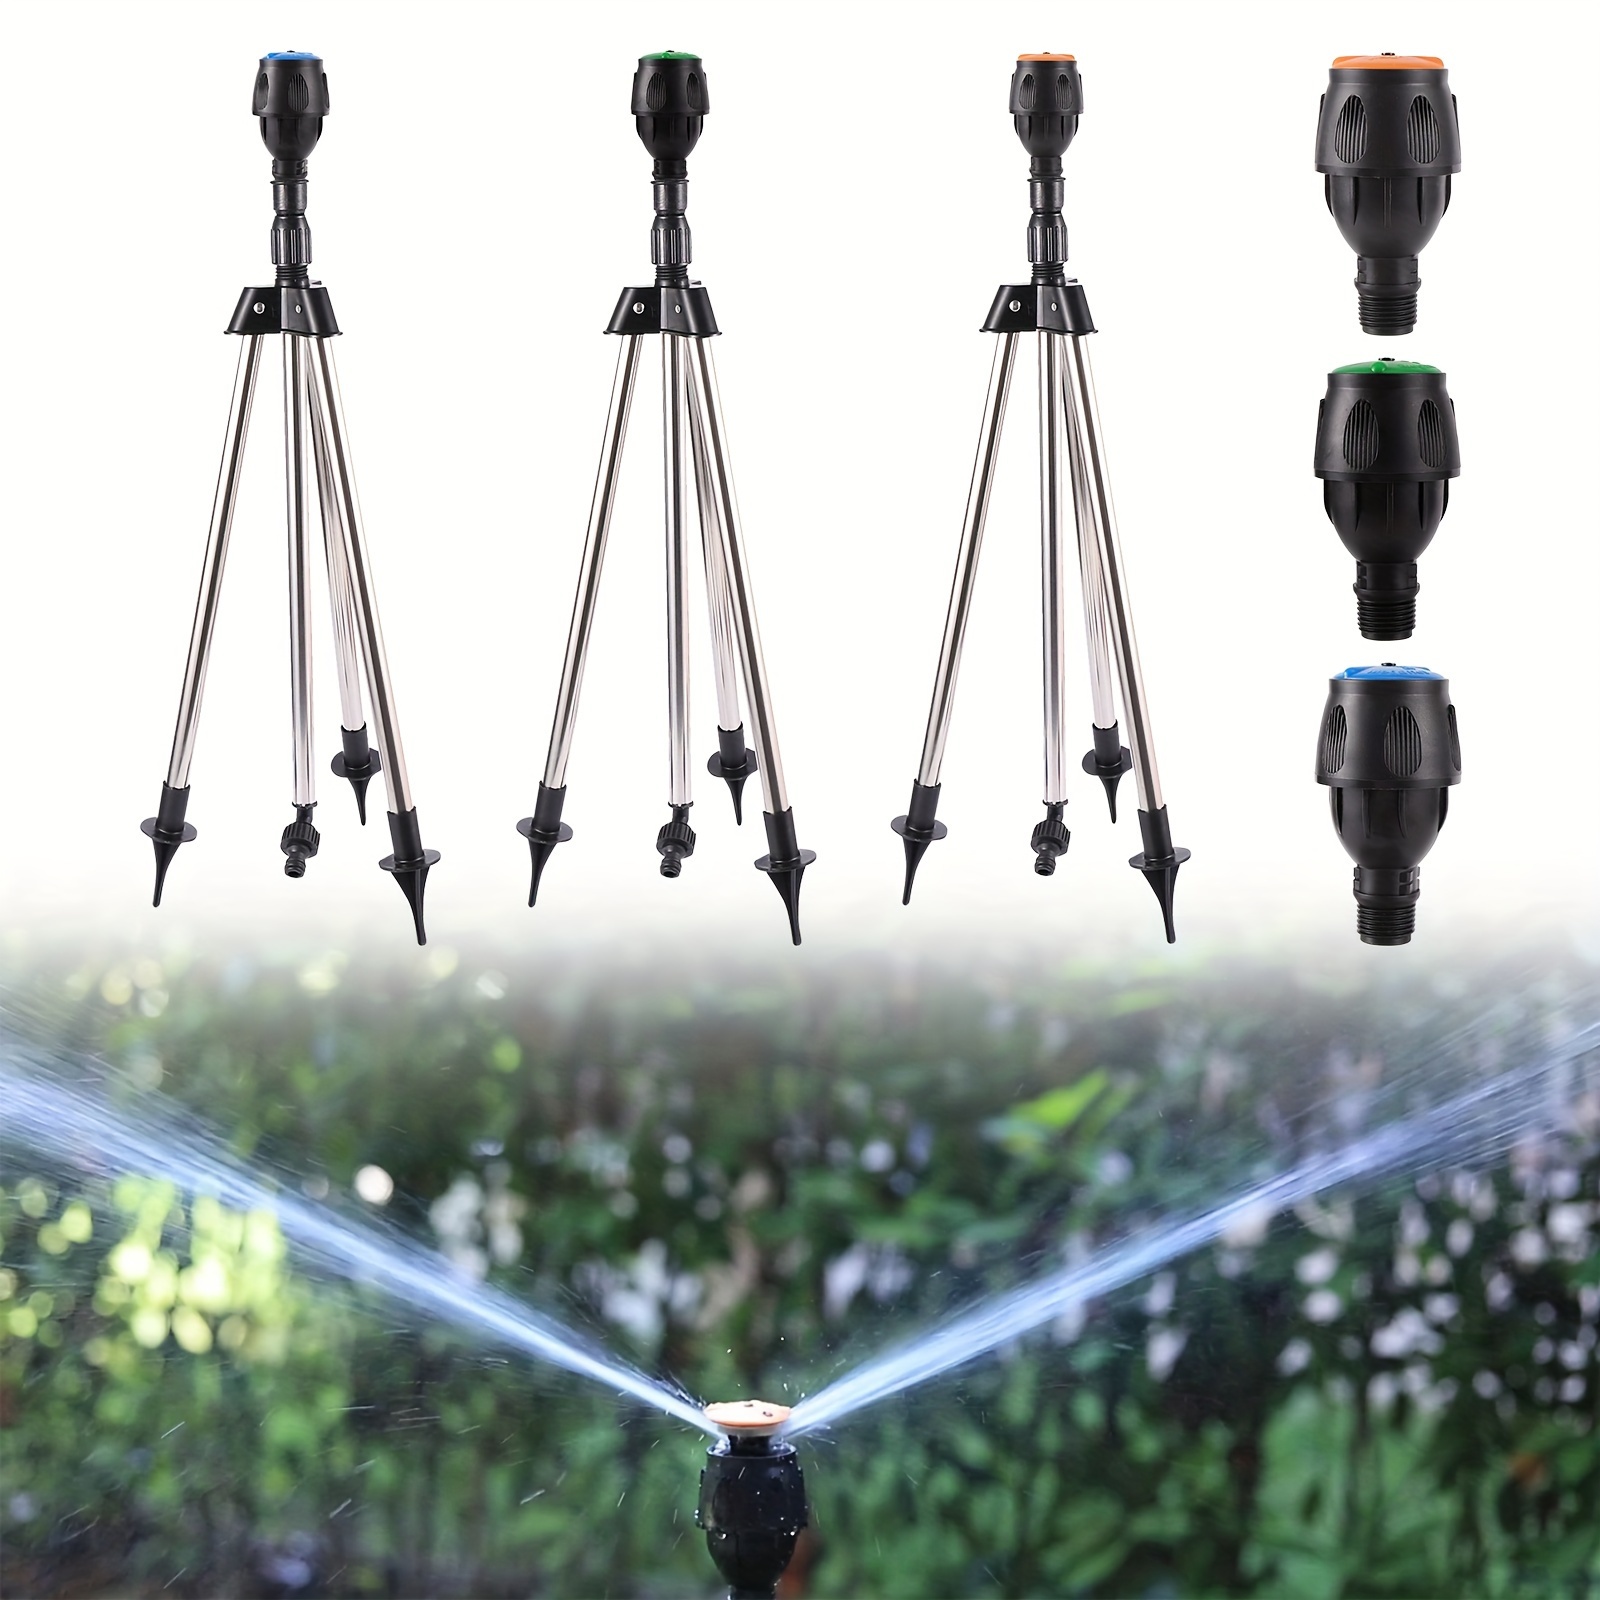 

1set 360°rotating Irrigation Nozzle Telescopic Tripod Sprinkler, New Creative Automatic Rotating Sprayer, Garden Farm Lawn Watering Sprinkler